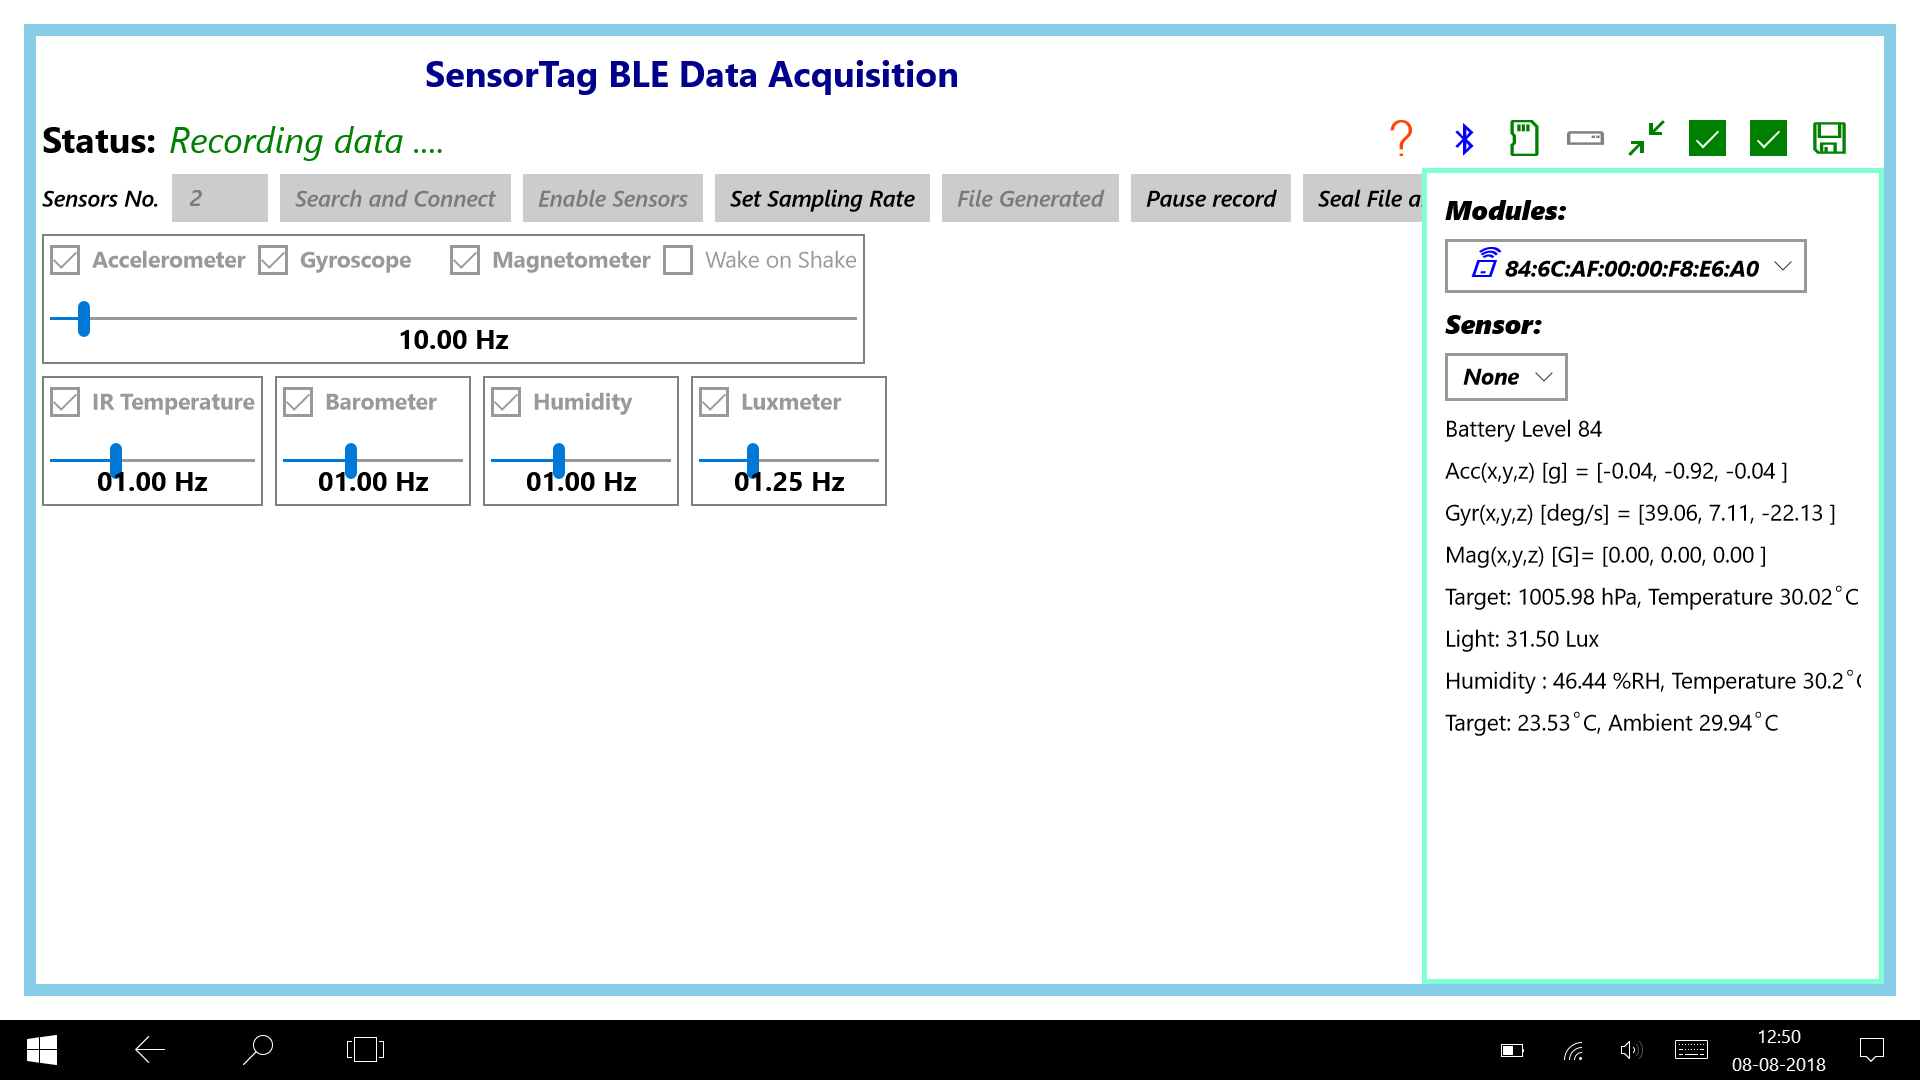 SensorTag Data Acquisition